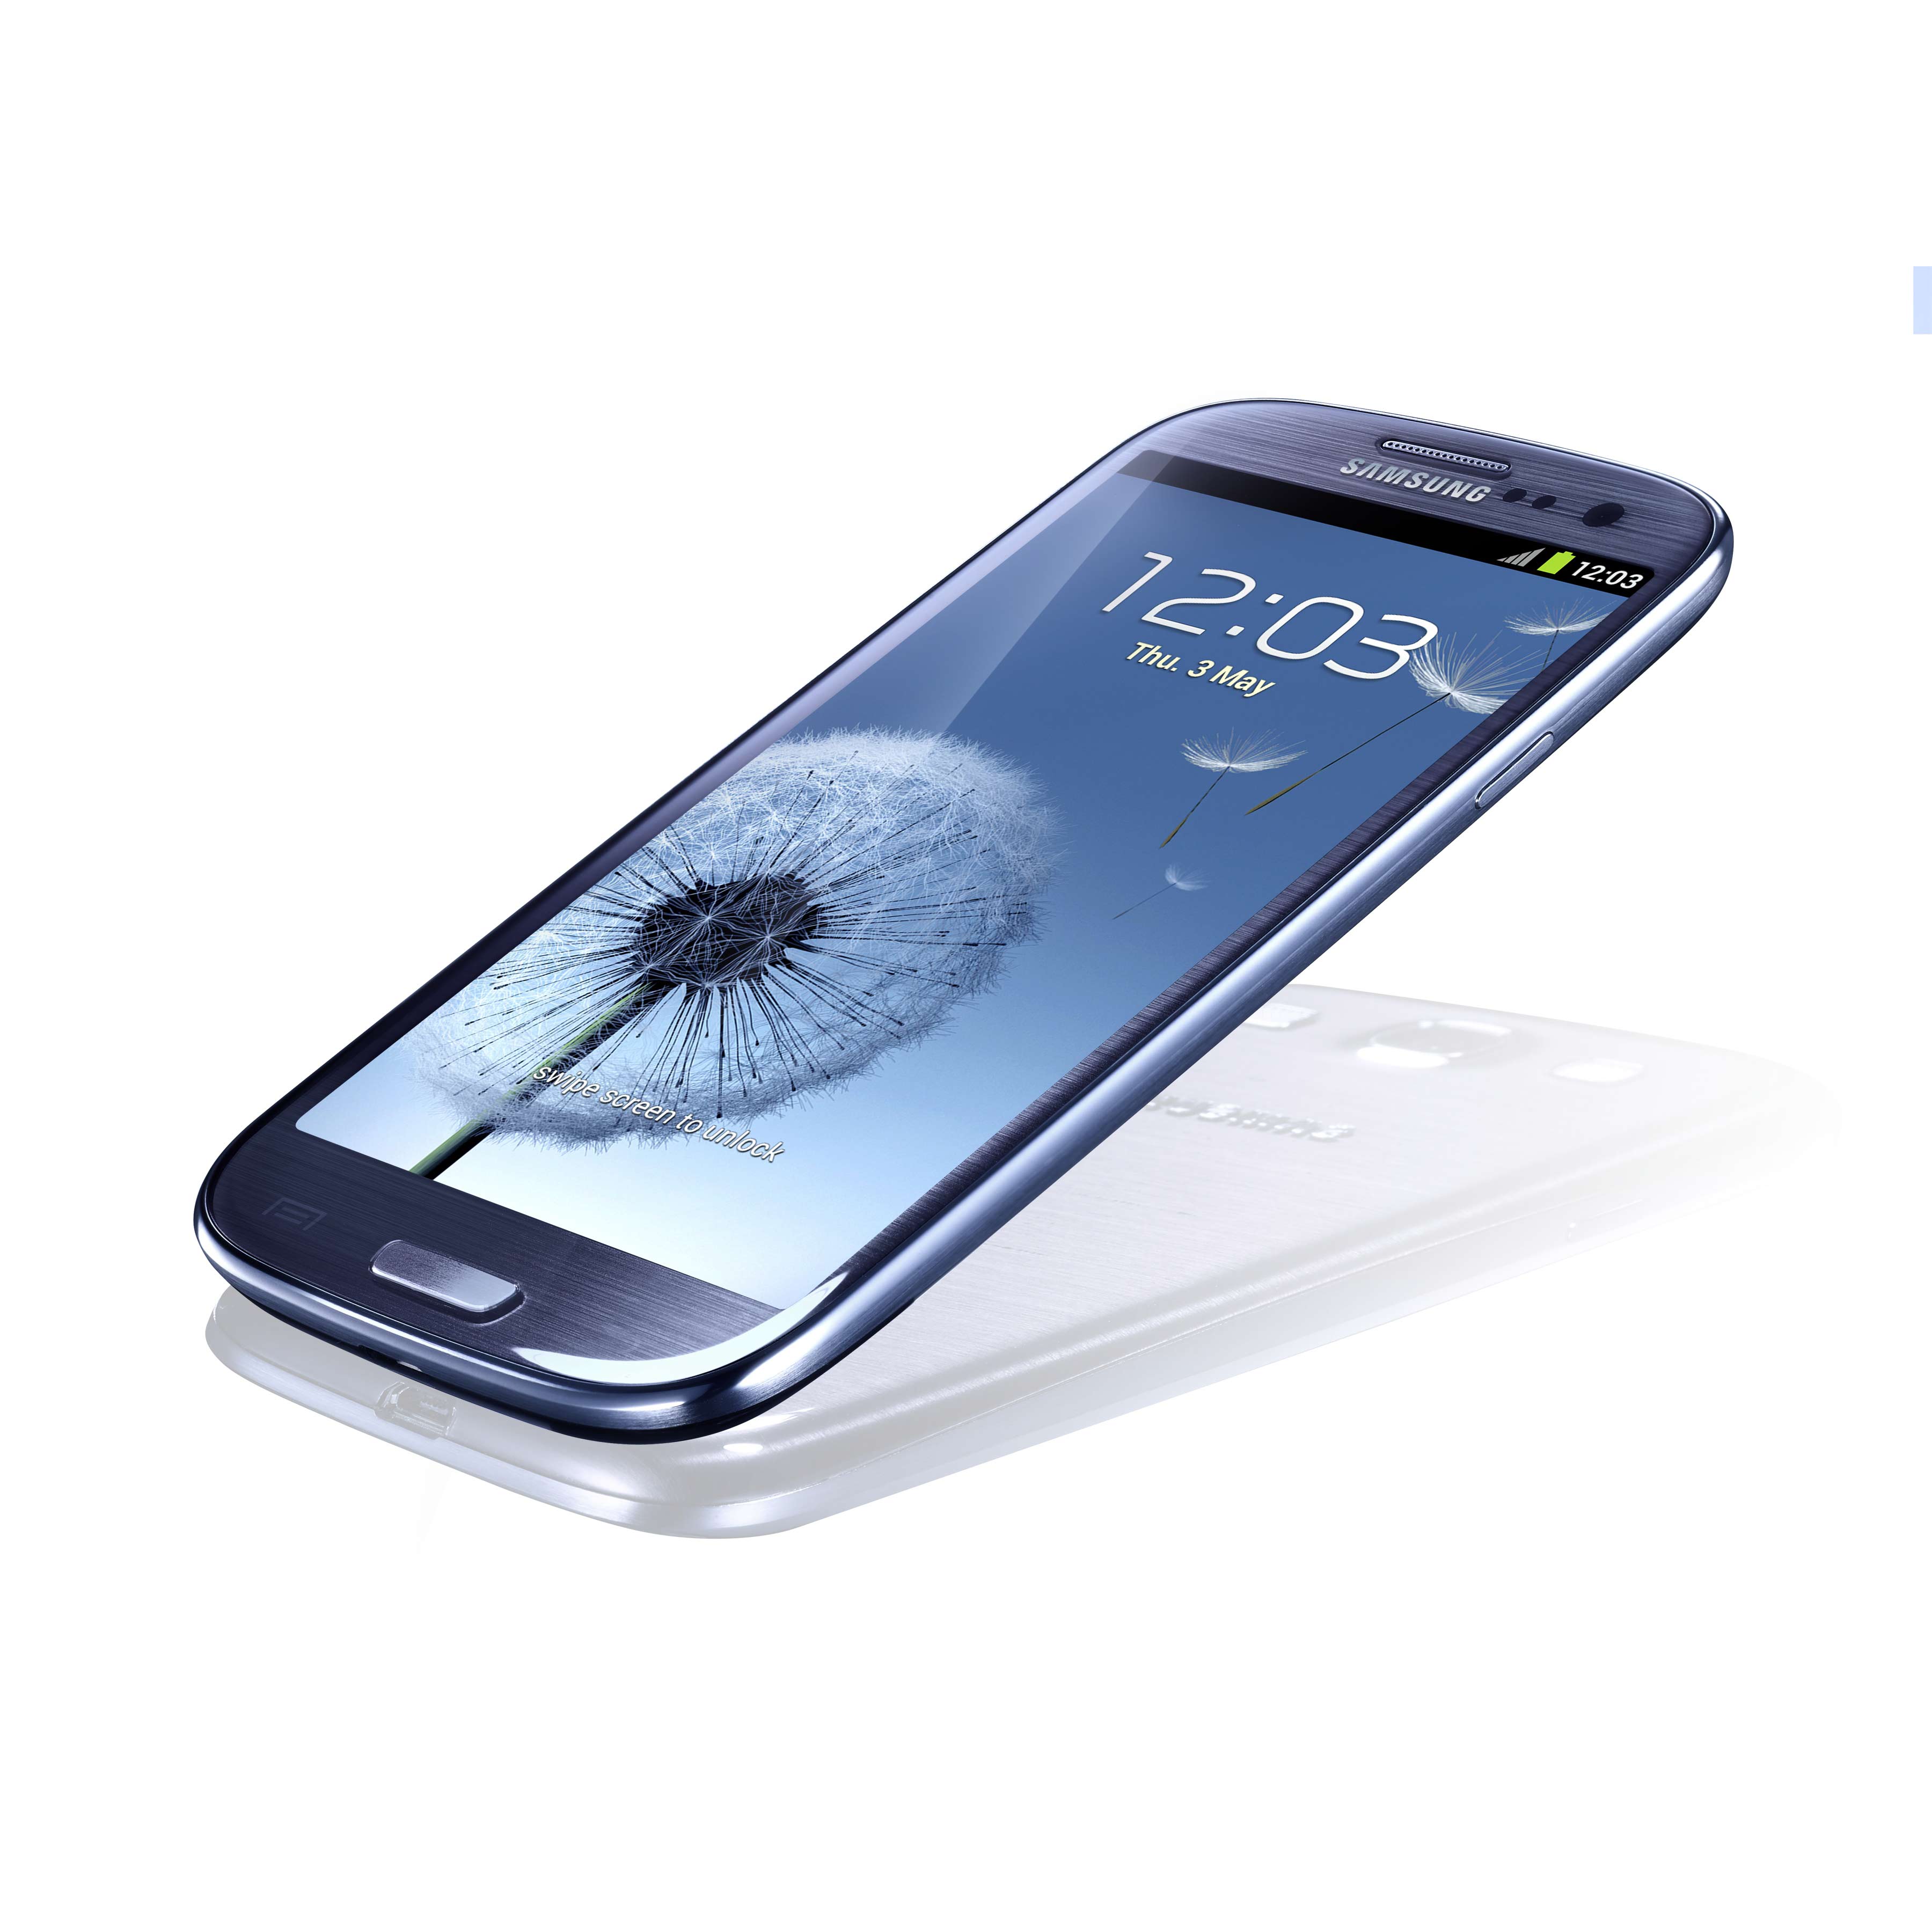 Телефоны самсунг цены спб. Samsung Galaxy s III gt-i9300 16gb. I9300 Galaxy s III 16gb Samsung. Samsung Galaxy s3 Neo. Смартфон Samsung Galaxy s III 4g gt-i9305.